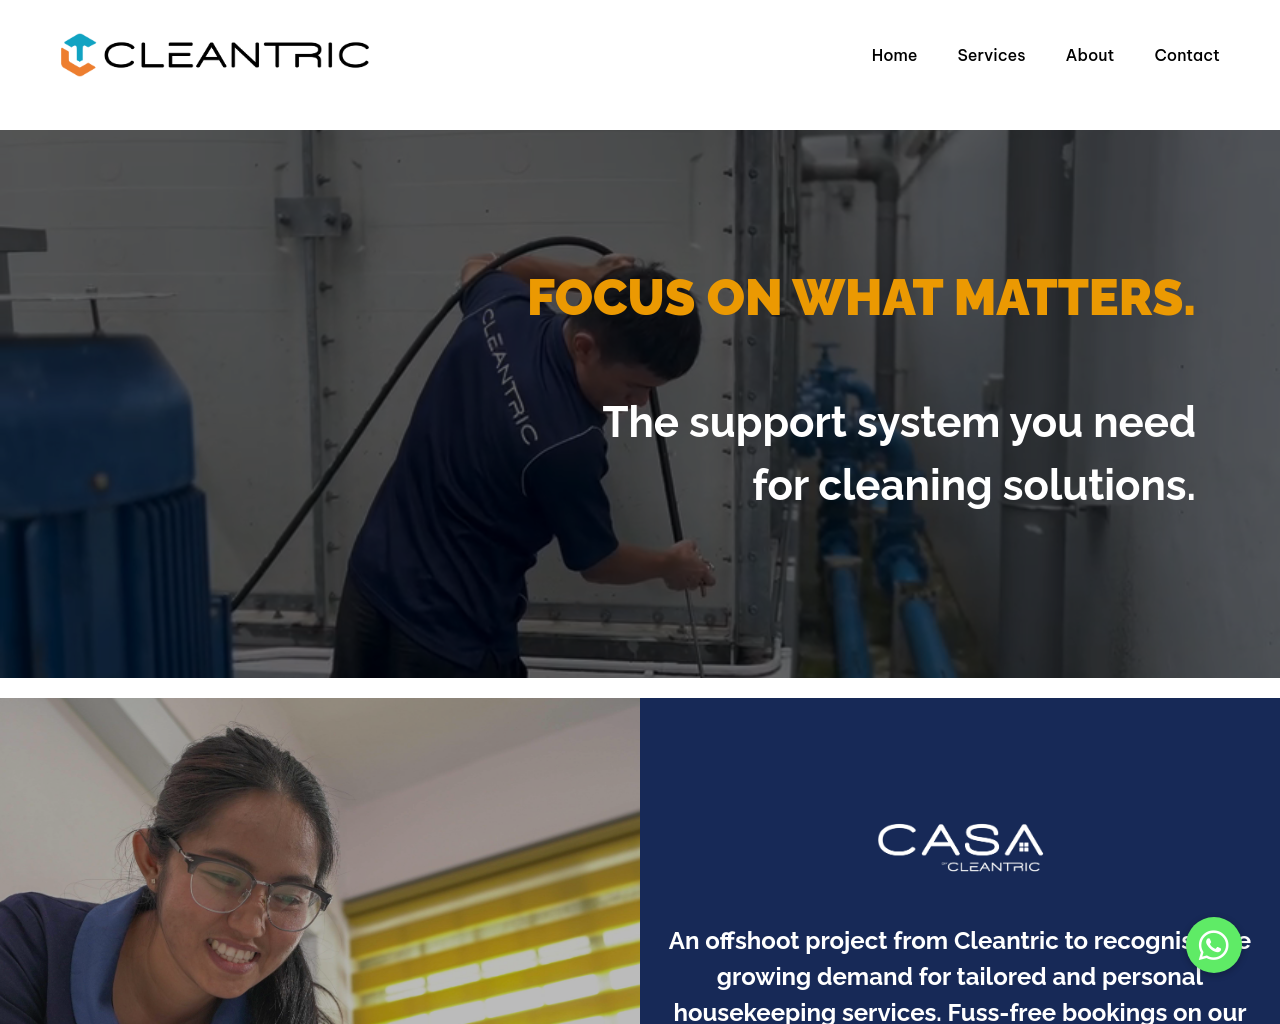 www.cleantricsolutions.com